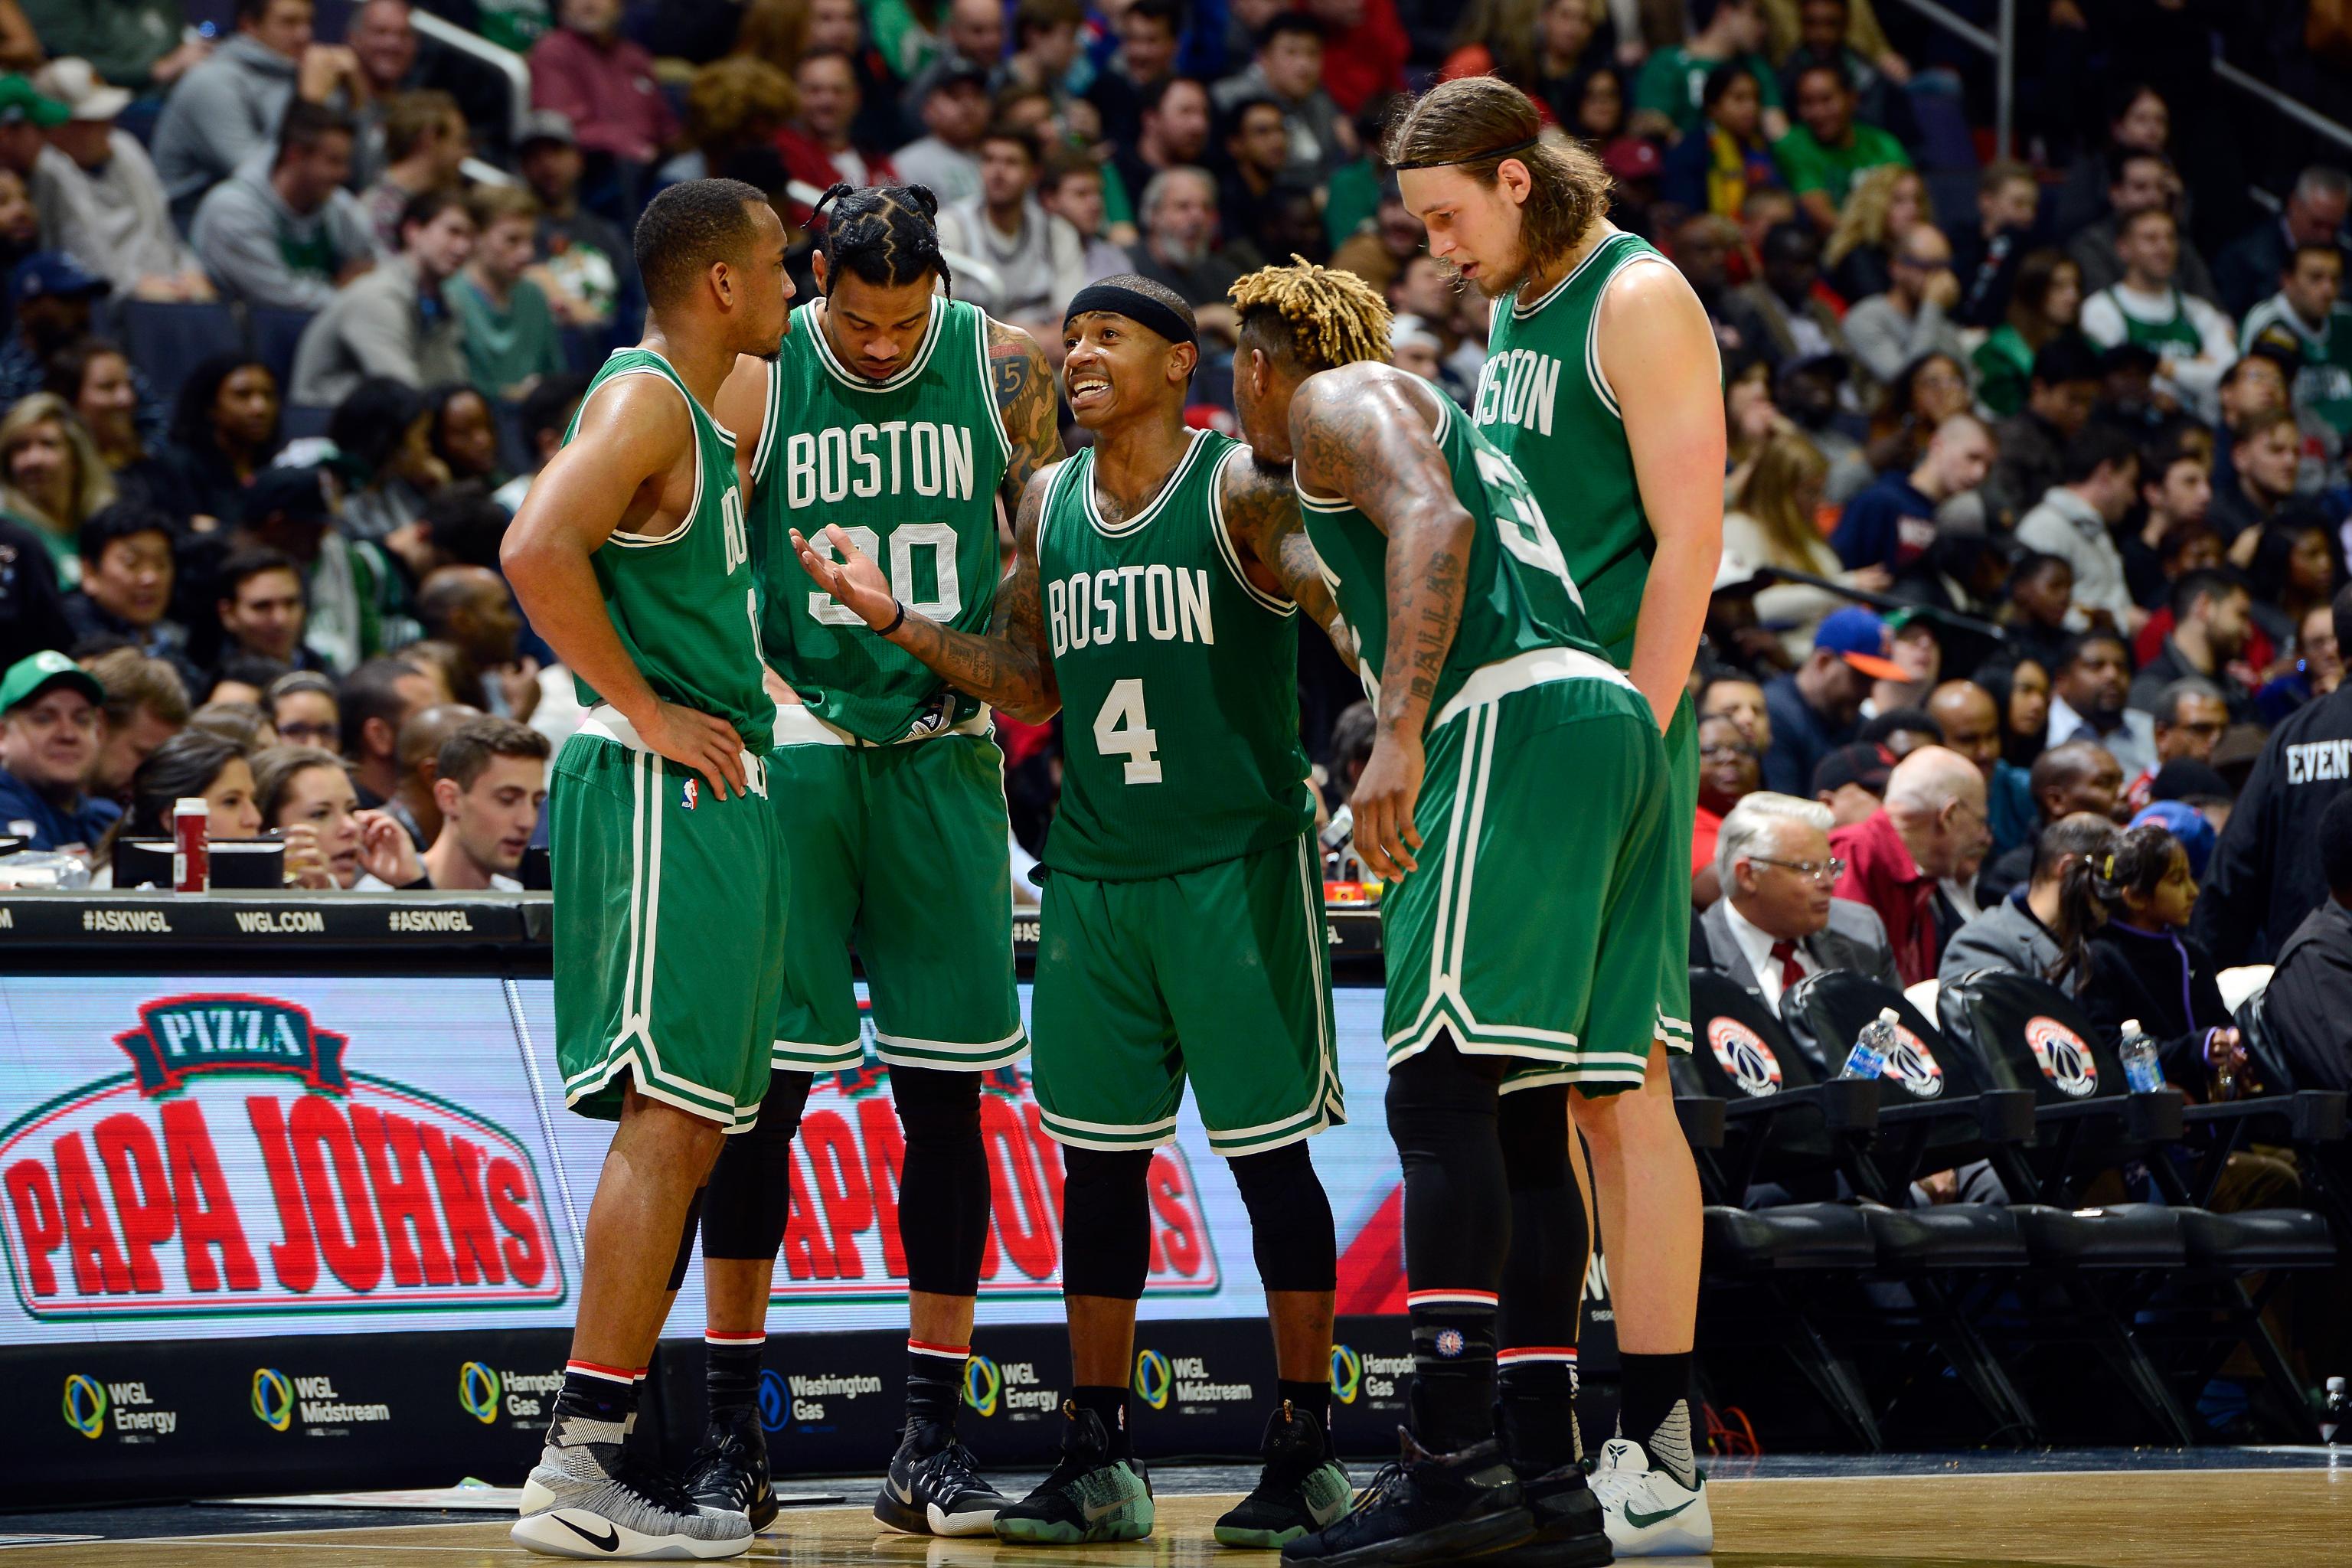 Celtics Jerseys Will Now Feature Vistaprint Logo Instead Of GE